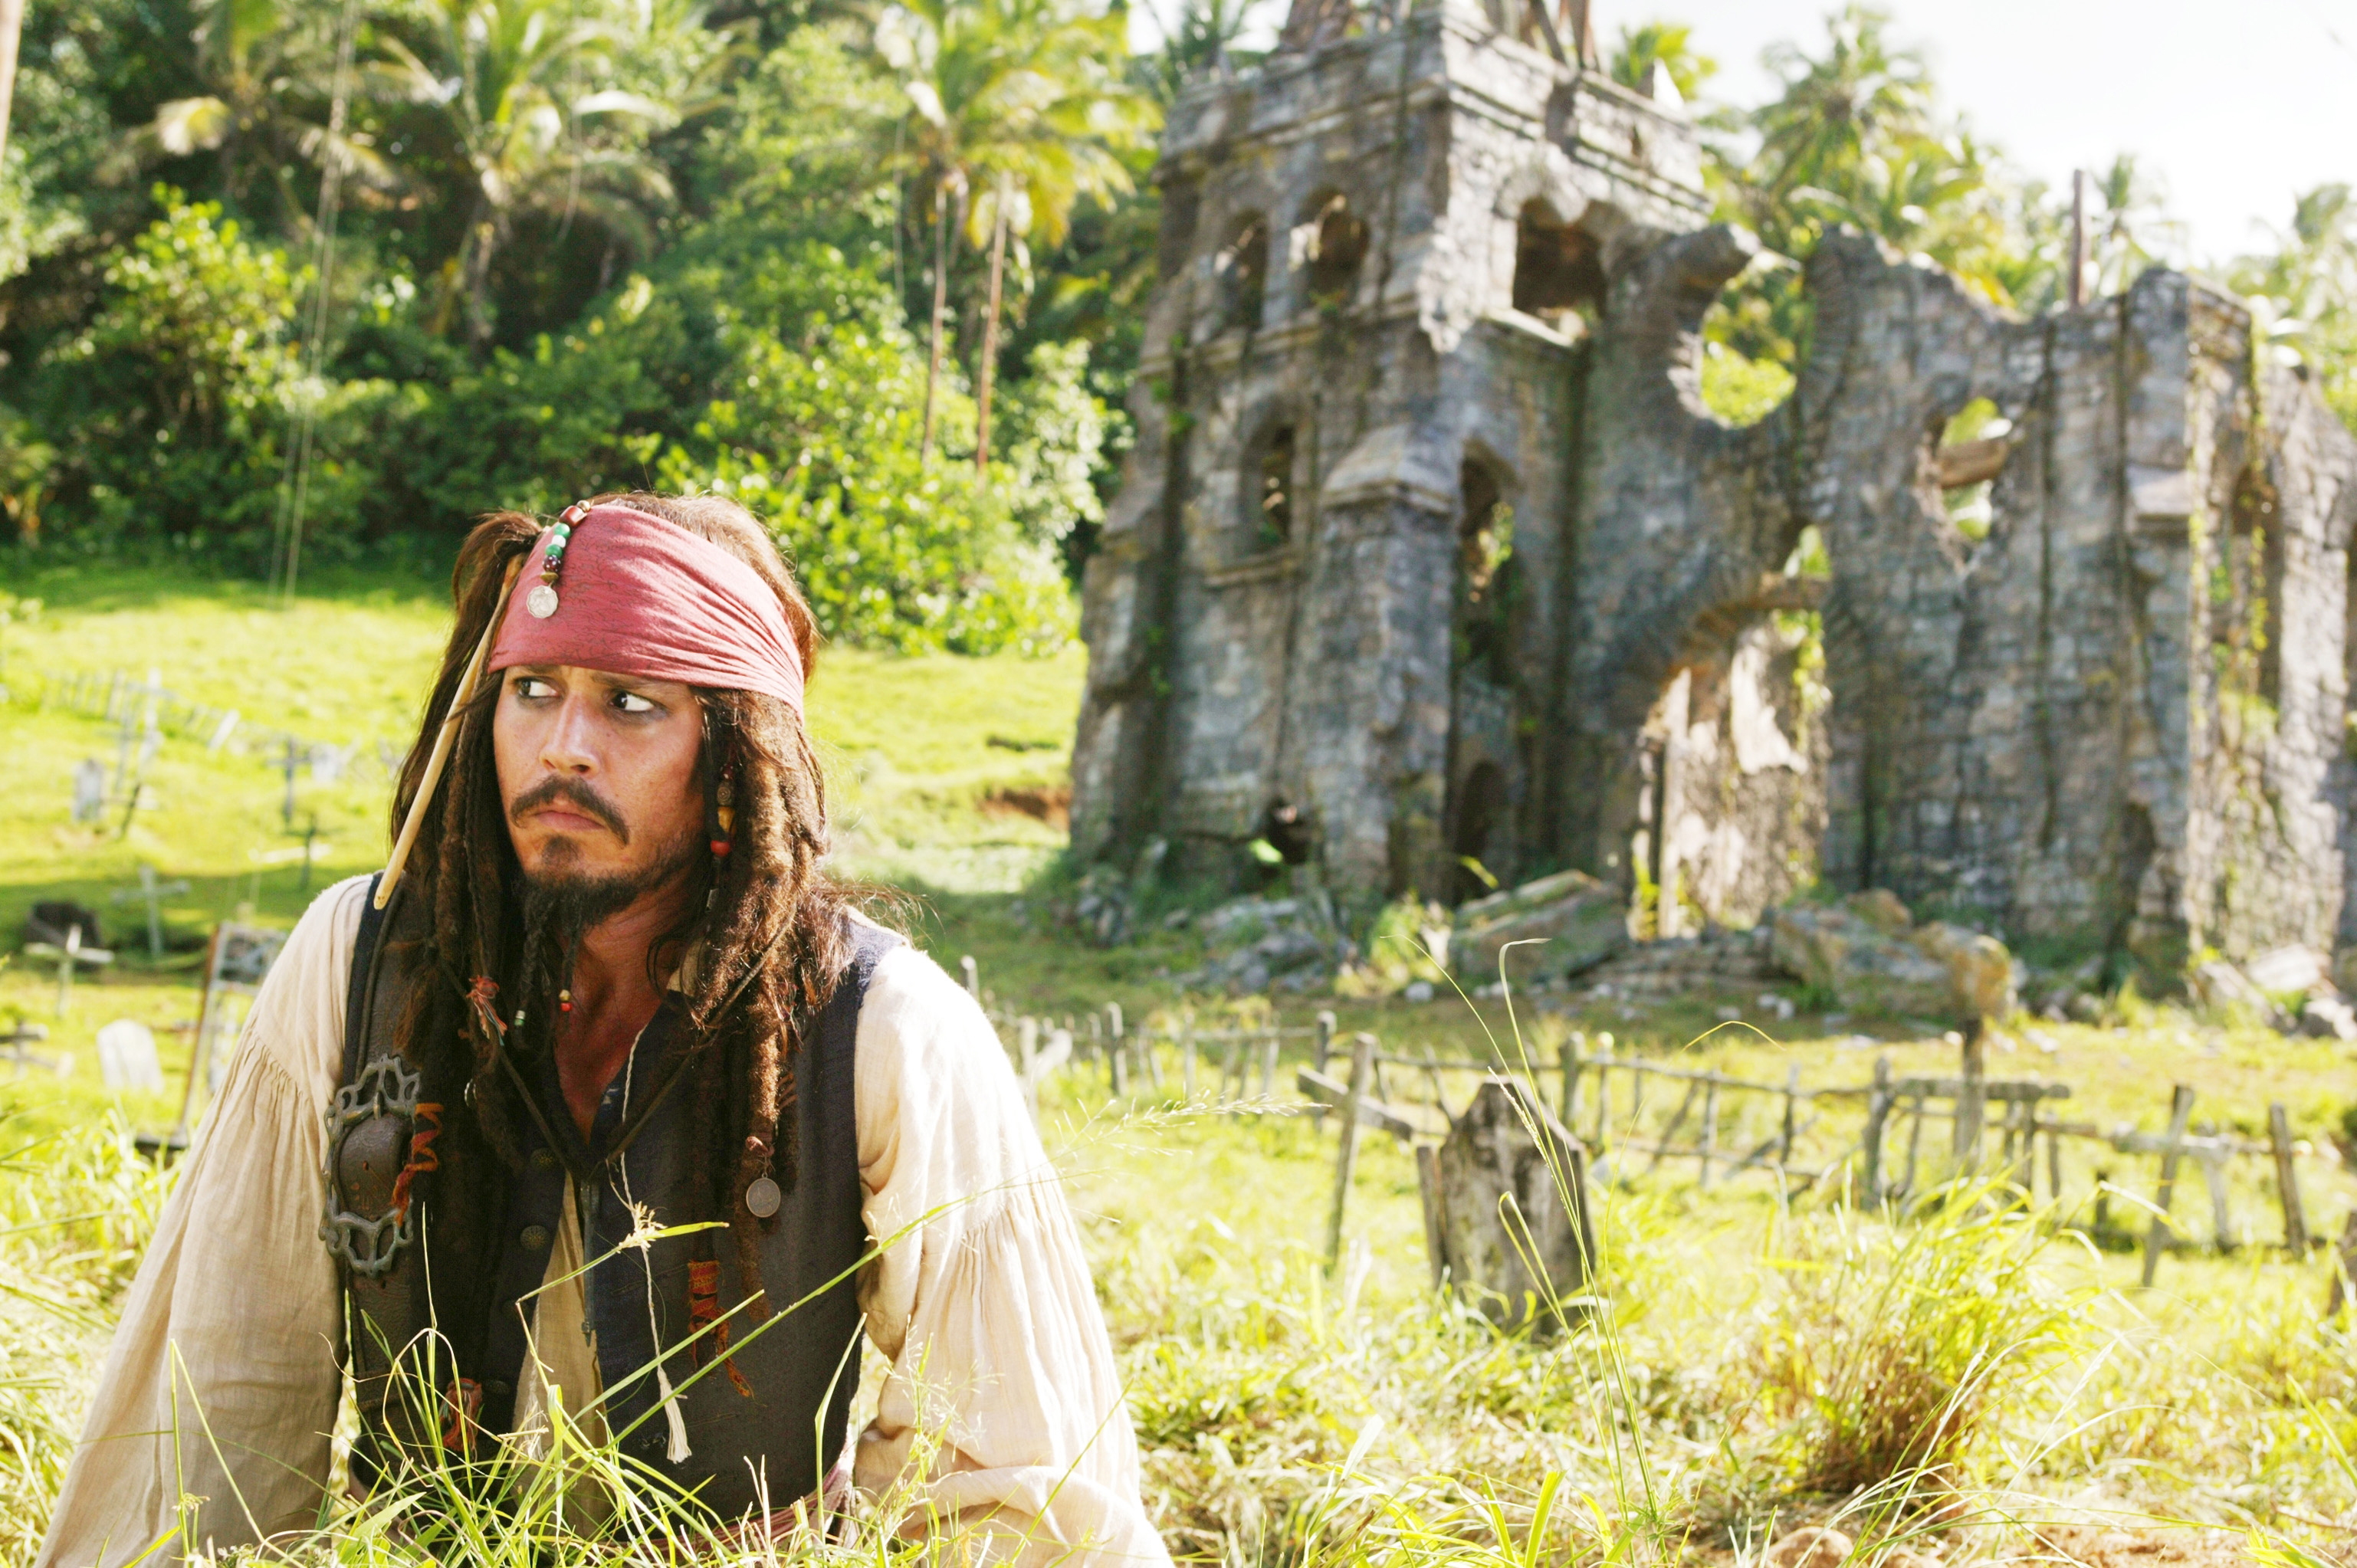 jack sparrow, movie, pirates of the caribbean: dead man's chest, johnny depp, pirates of the caribbean